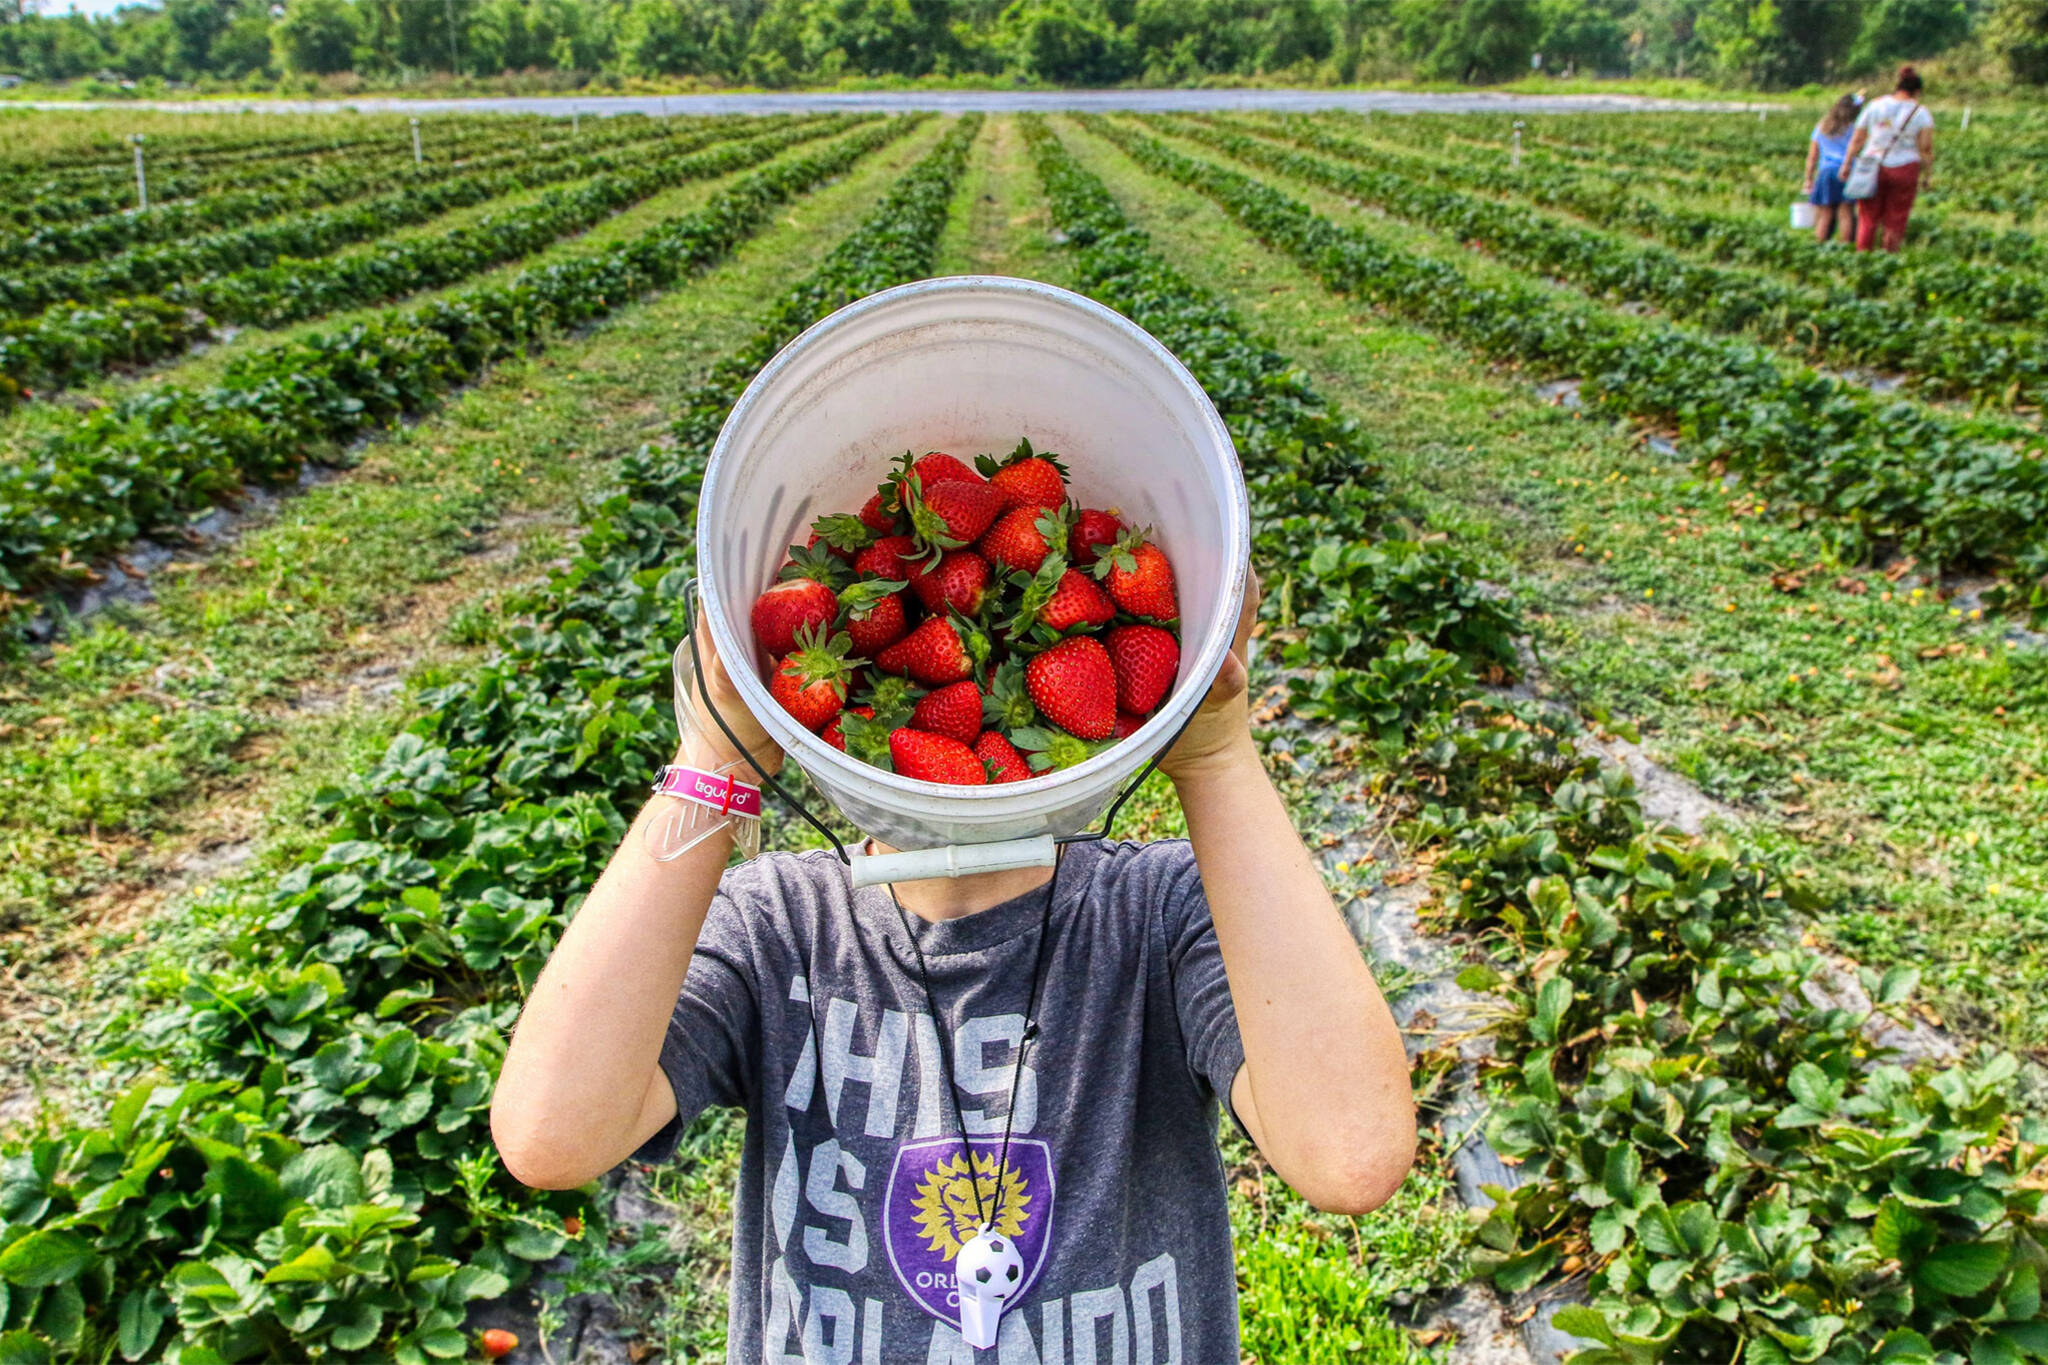 Pickyourown strawberries at farms near Toronto open for the season